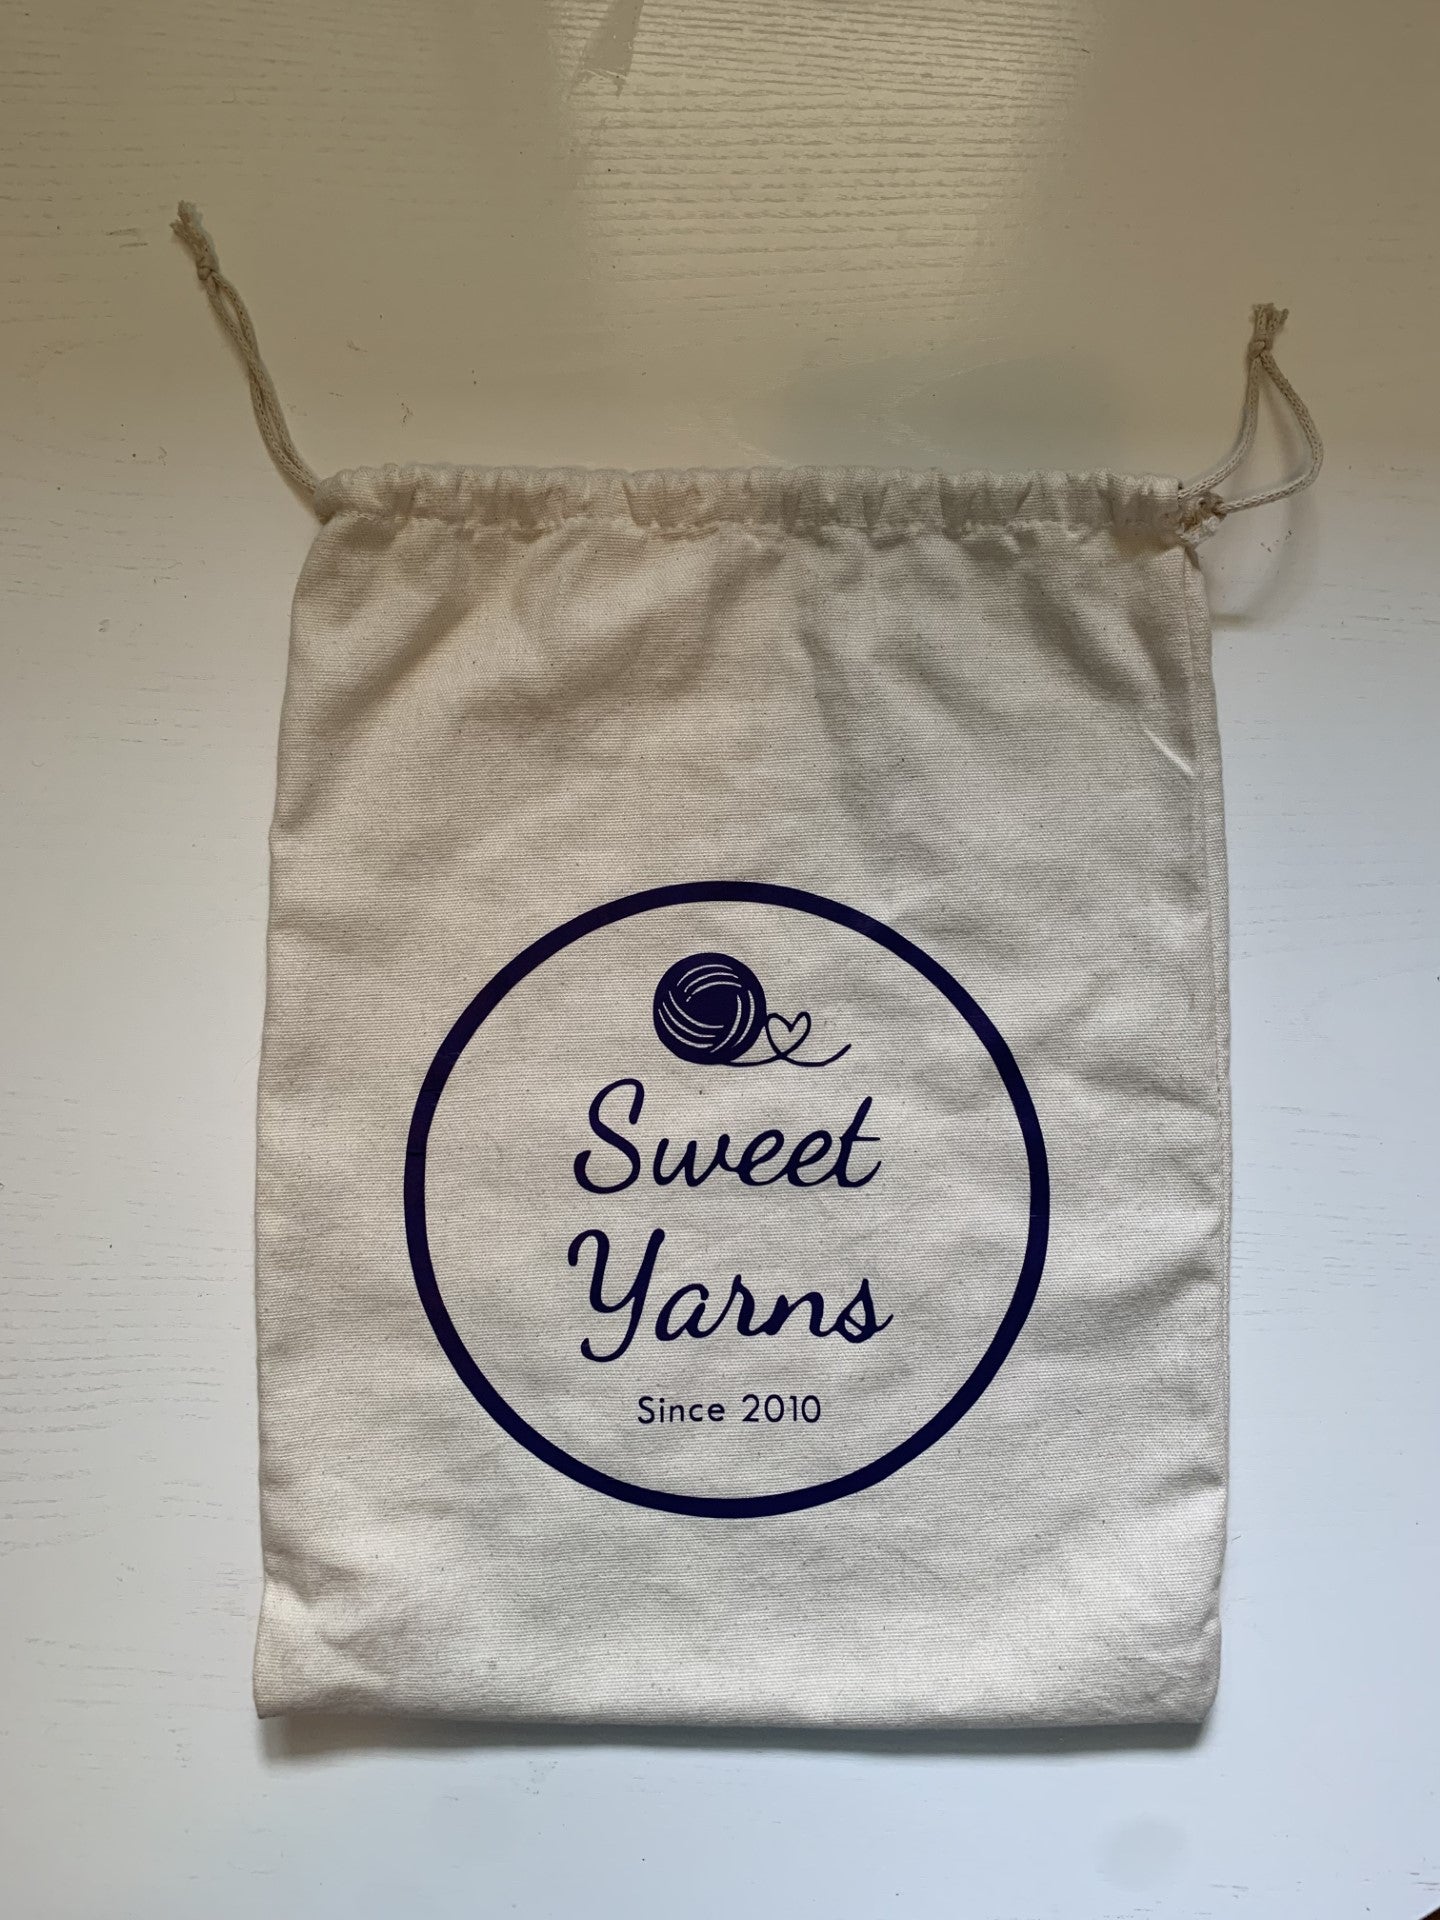 Sweet Yarns' Bags